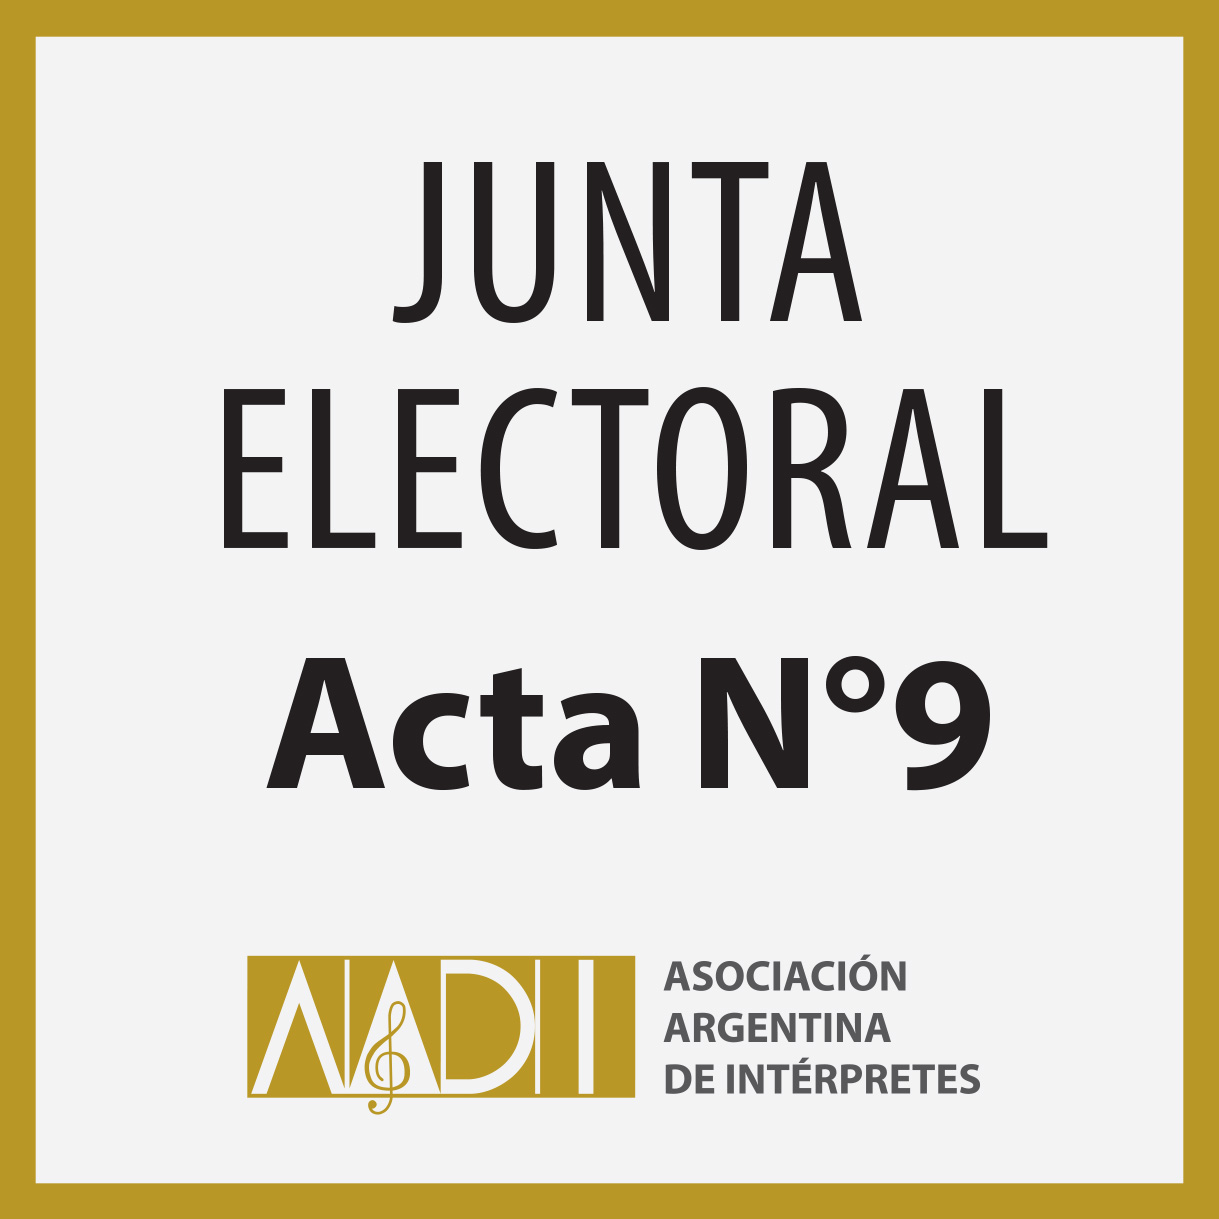 JUNTA ELECTORAL ACTA NRO. 9